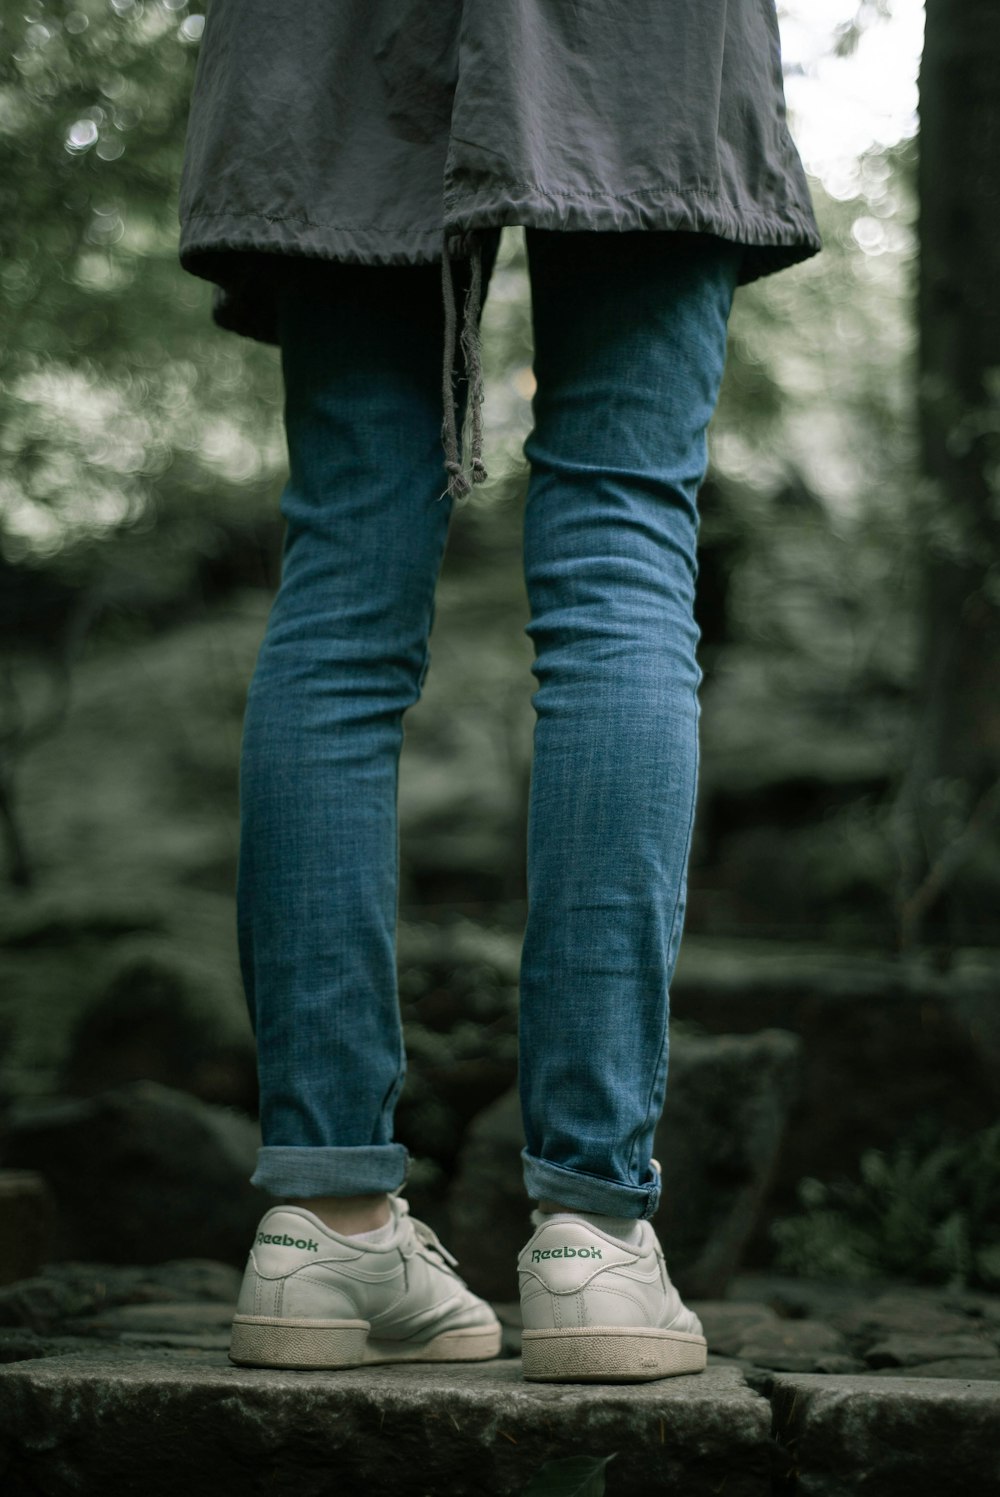 persona in jeans blu e scarpe da ginnastica bianche foto – Portland  Immagine gratuita su Unsplash